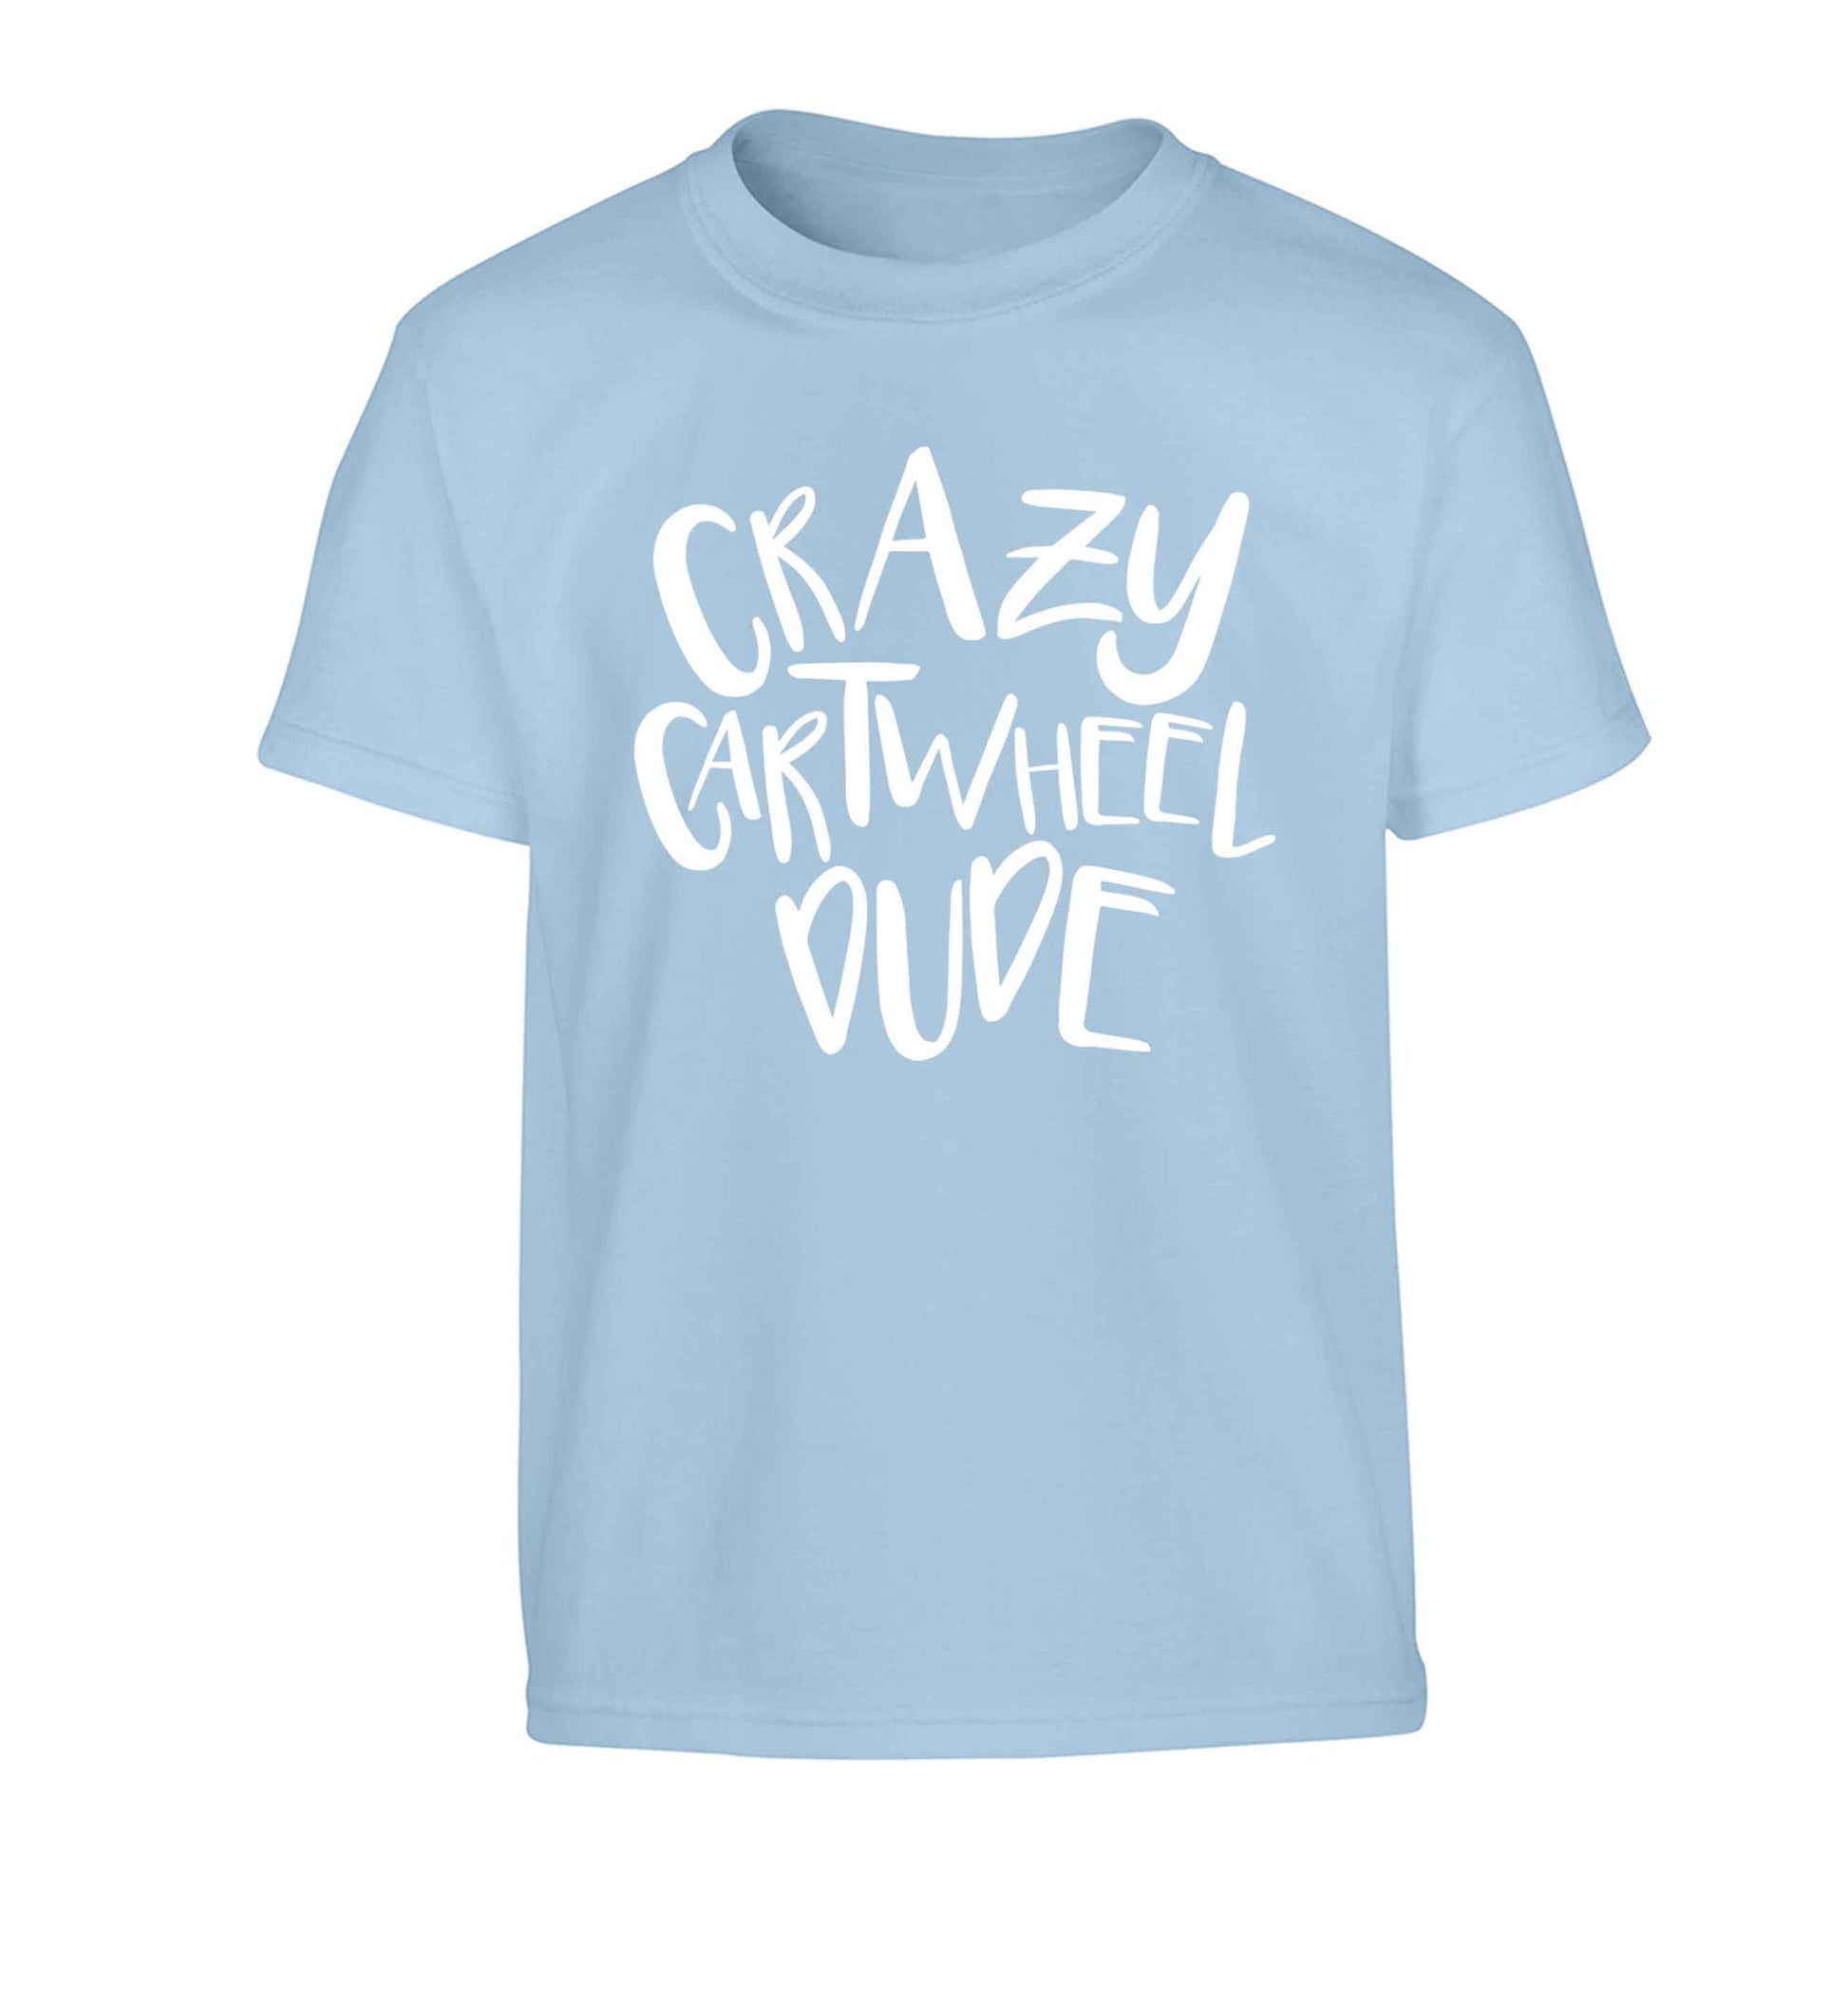 Crazy cartwheel dude Children's light blue Tshirt 12-13 Years